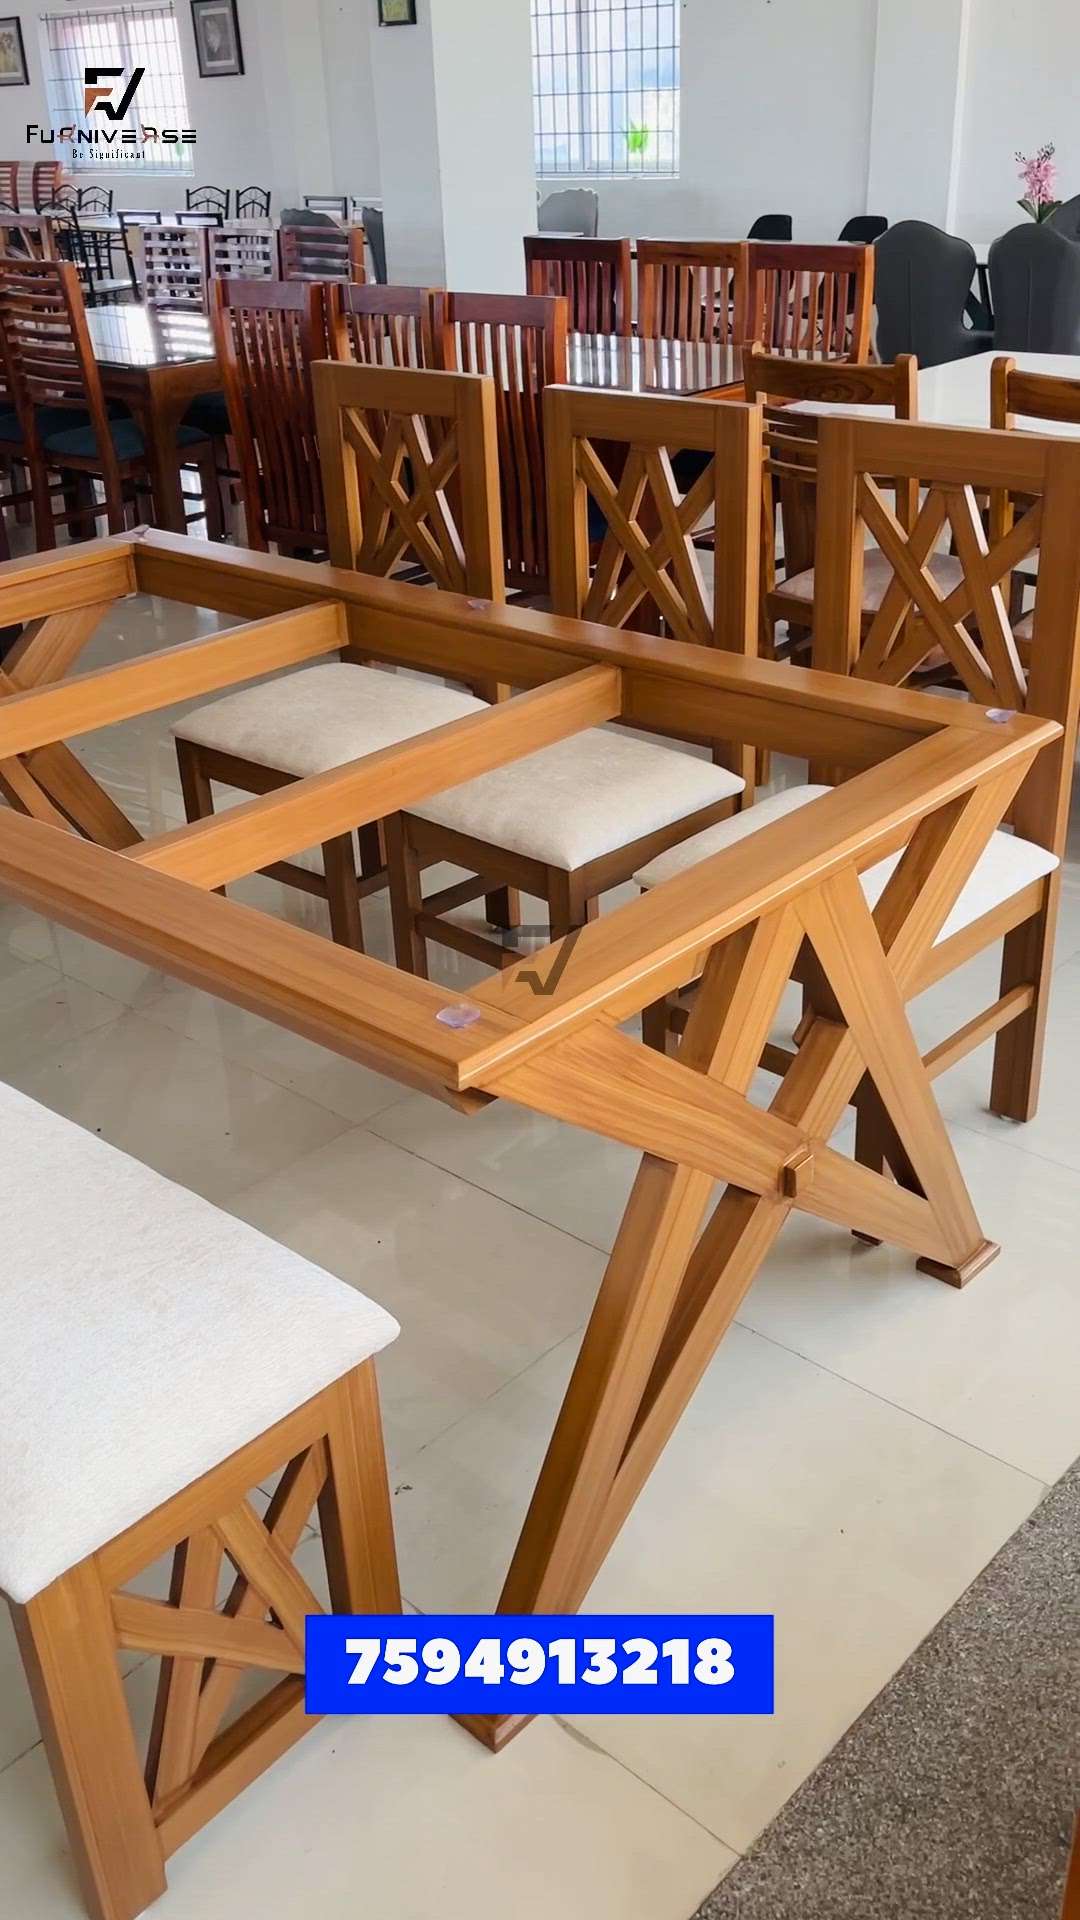 6 Seat Dining Set
Seasoned Mahogany wood
table+3 chairs+1 bench
.
.
 #furniture   #furnituremanufacturer  #HomeDecor  #Palakkad  #kerala  #koloapp